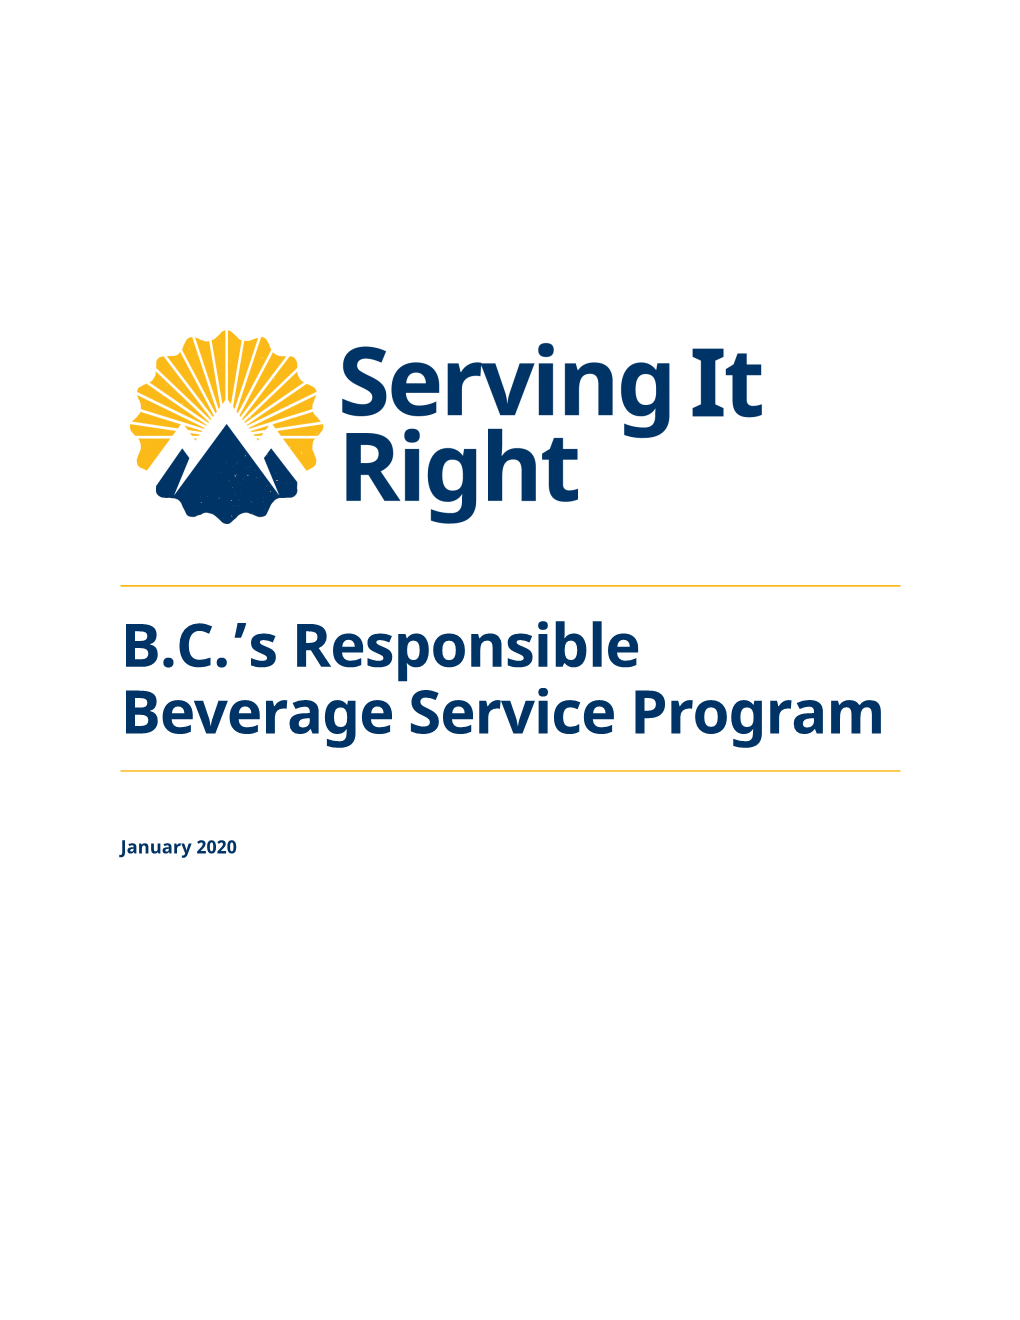 B.C.'S Responsible Beverage Service Program